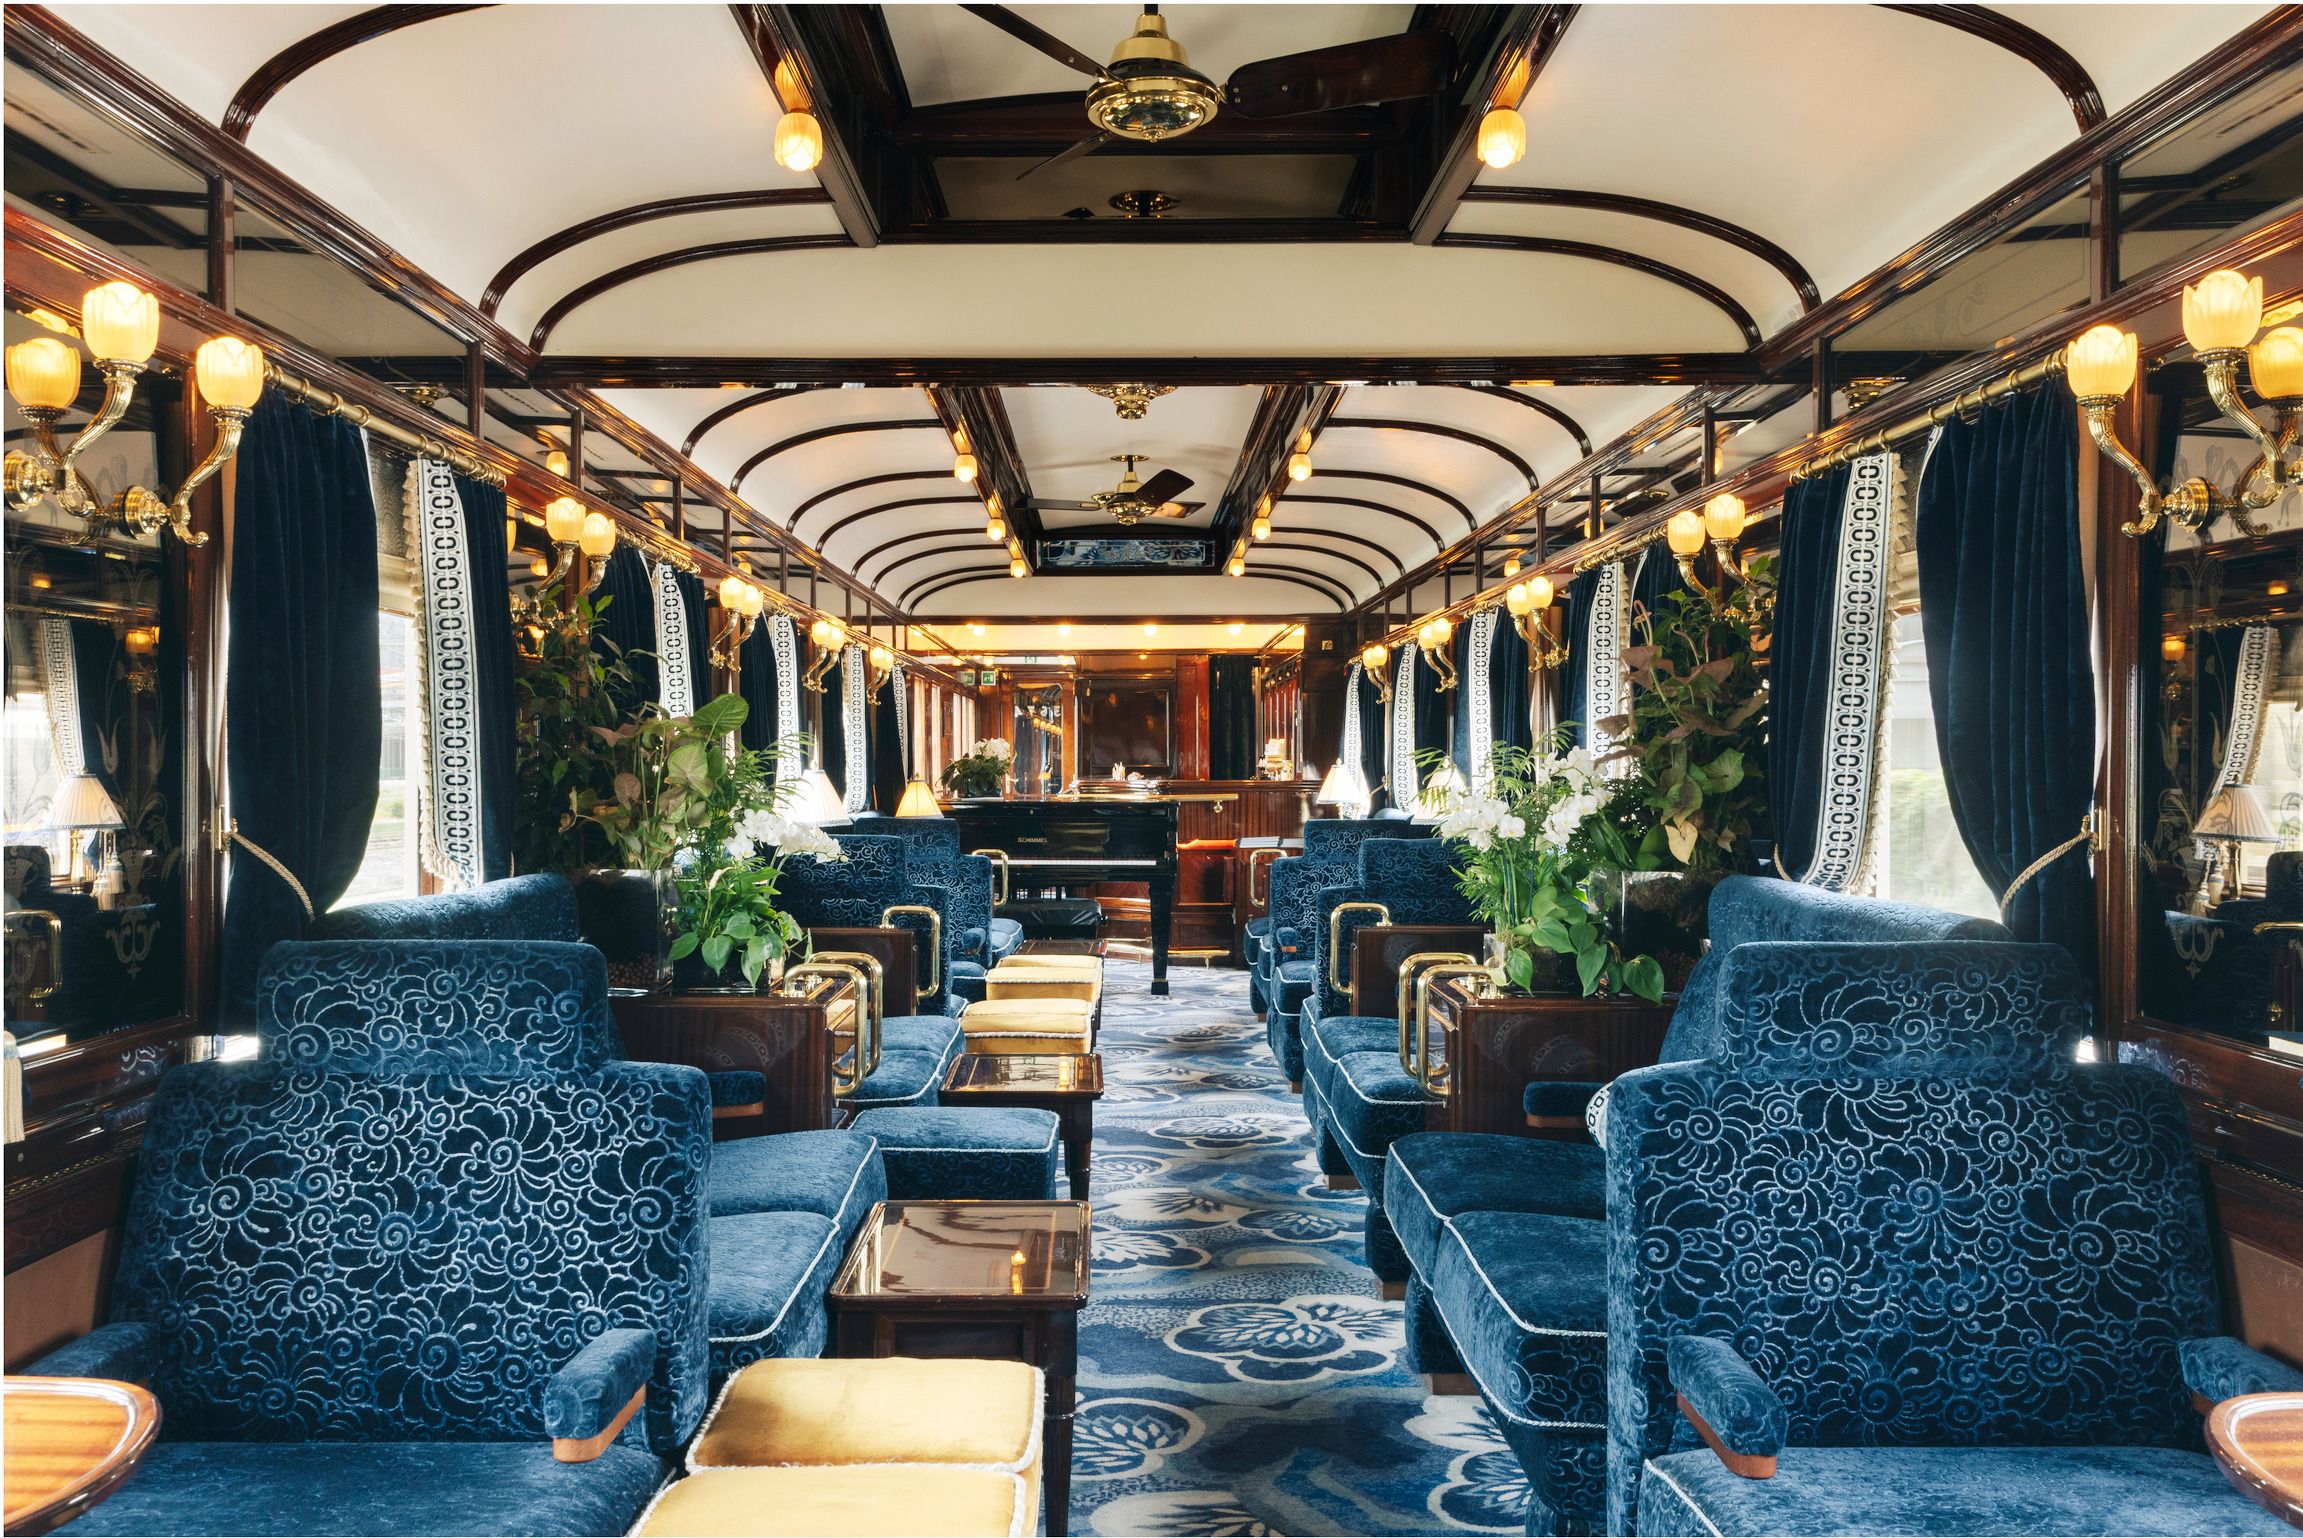 Budapest Grand Suite  Venice Simplon-Orient-Express Luxury Train